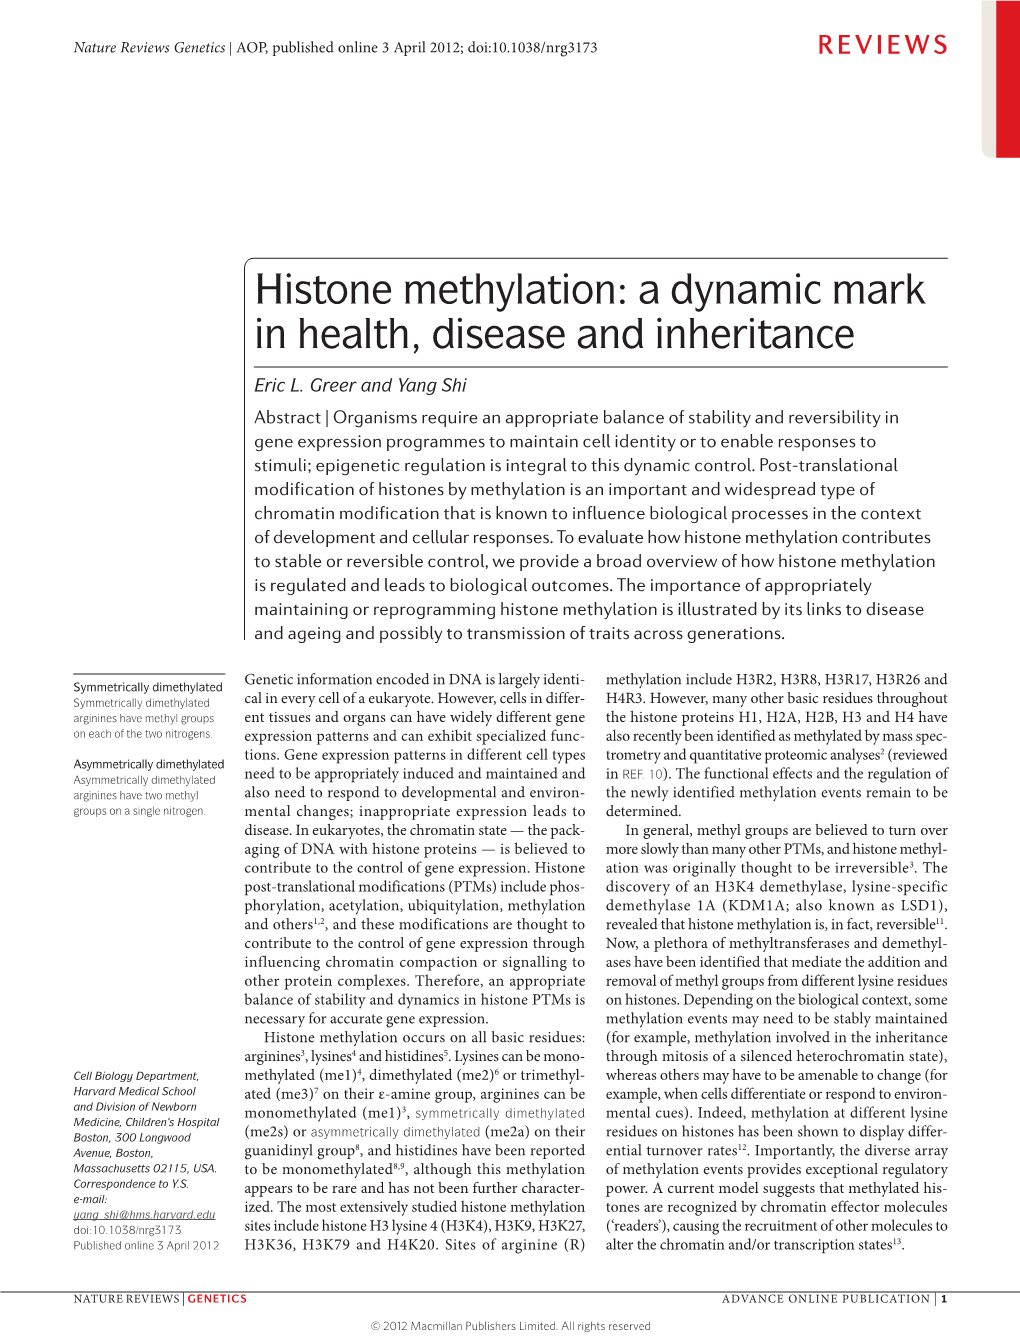 Histone Methylation: a Dynamic Mark in Health, Disease and Inheritance